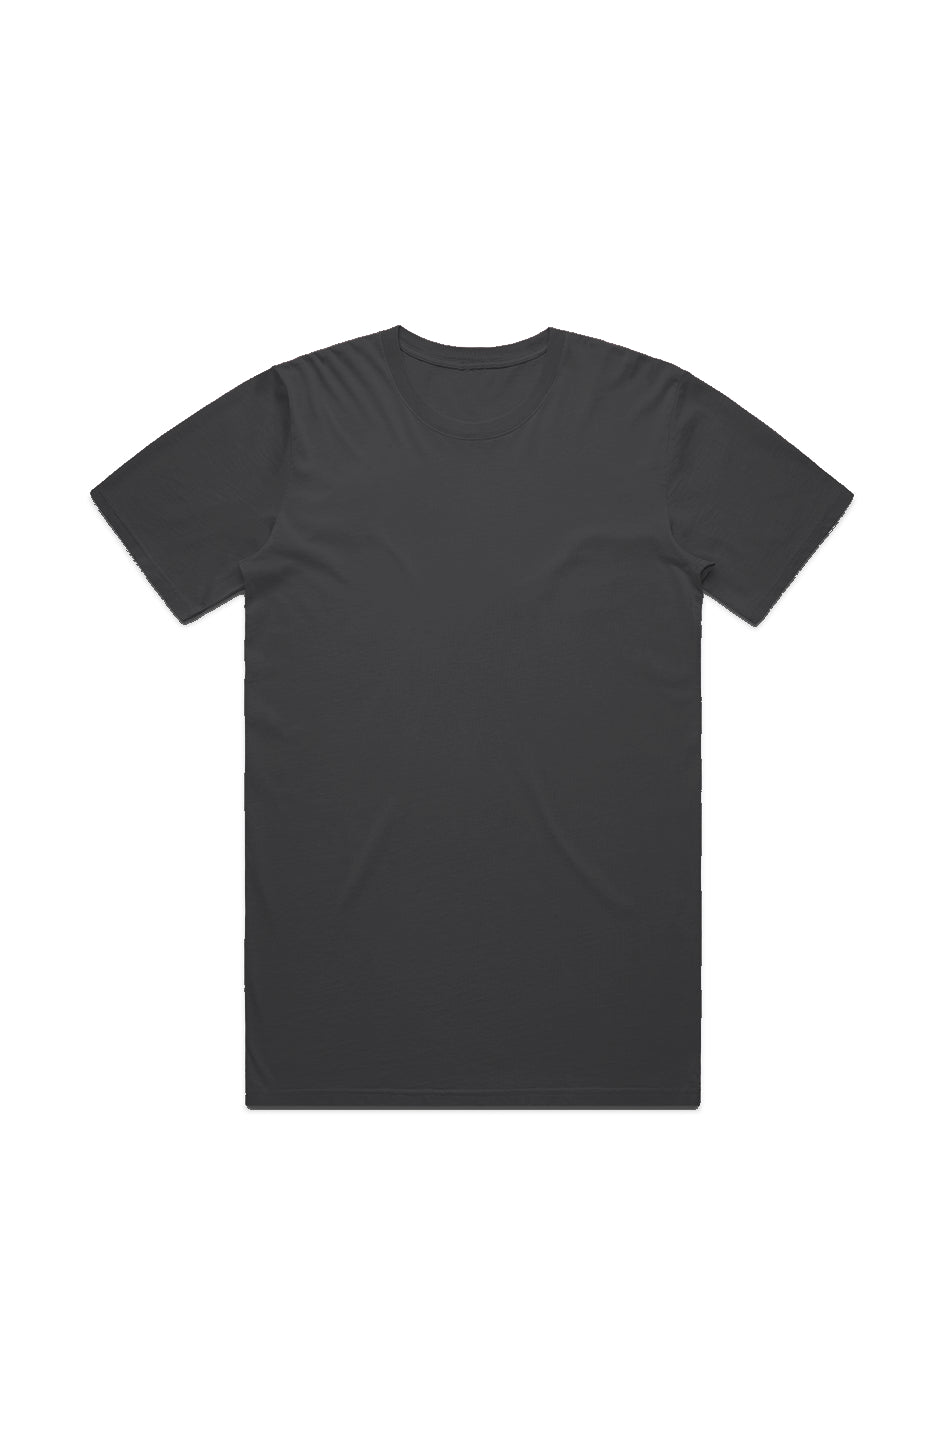 Men's Premium Faded Black T-shirt - Men's T-Shirts - Apliiq - Men's Premium Faded T-shirt - APQ-4658256S6A0 - s - Faded Black - Black - Black T-shirt - Dragon Foxx™